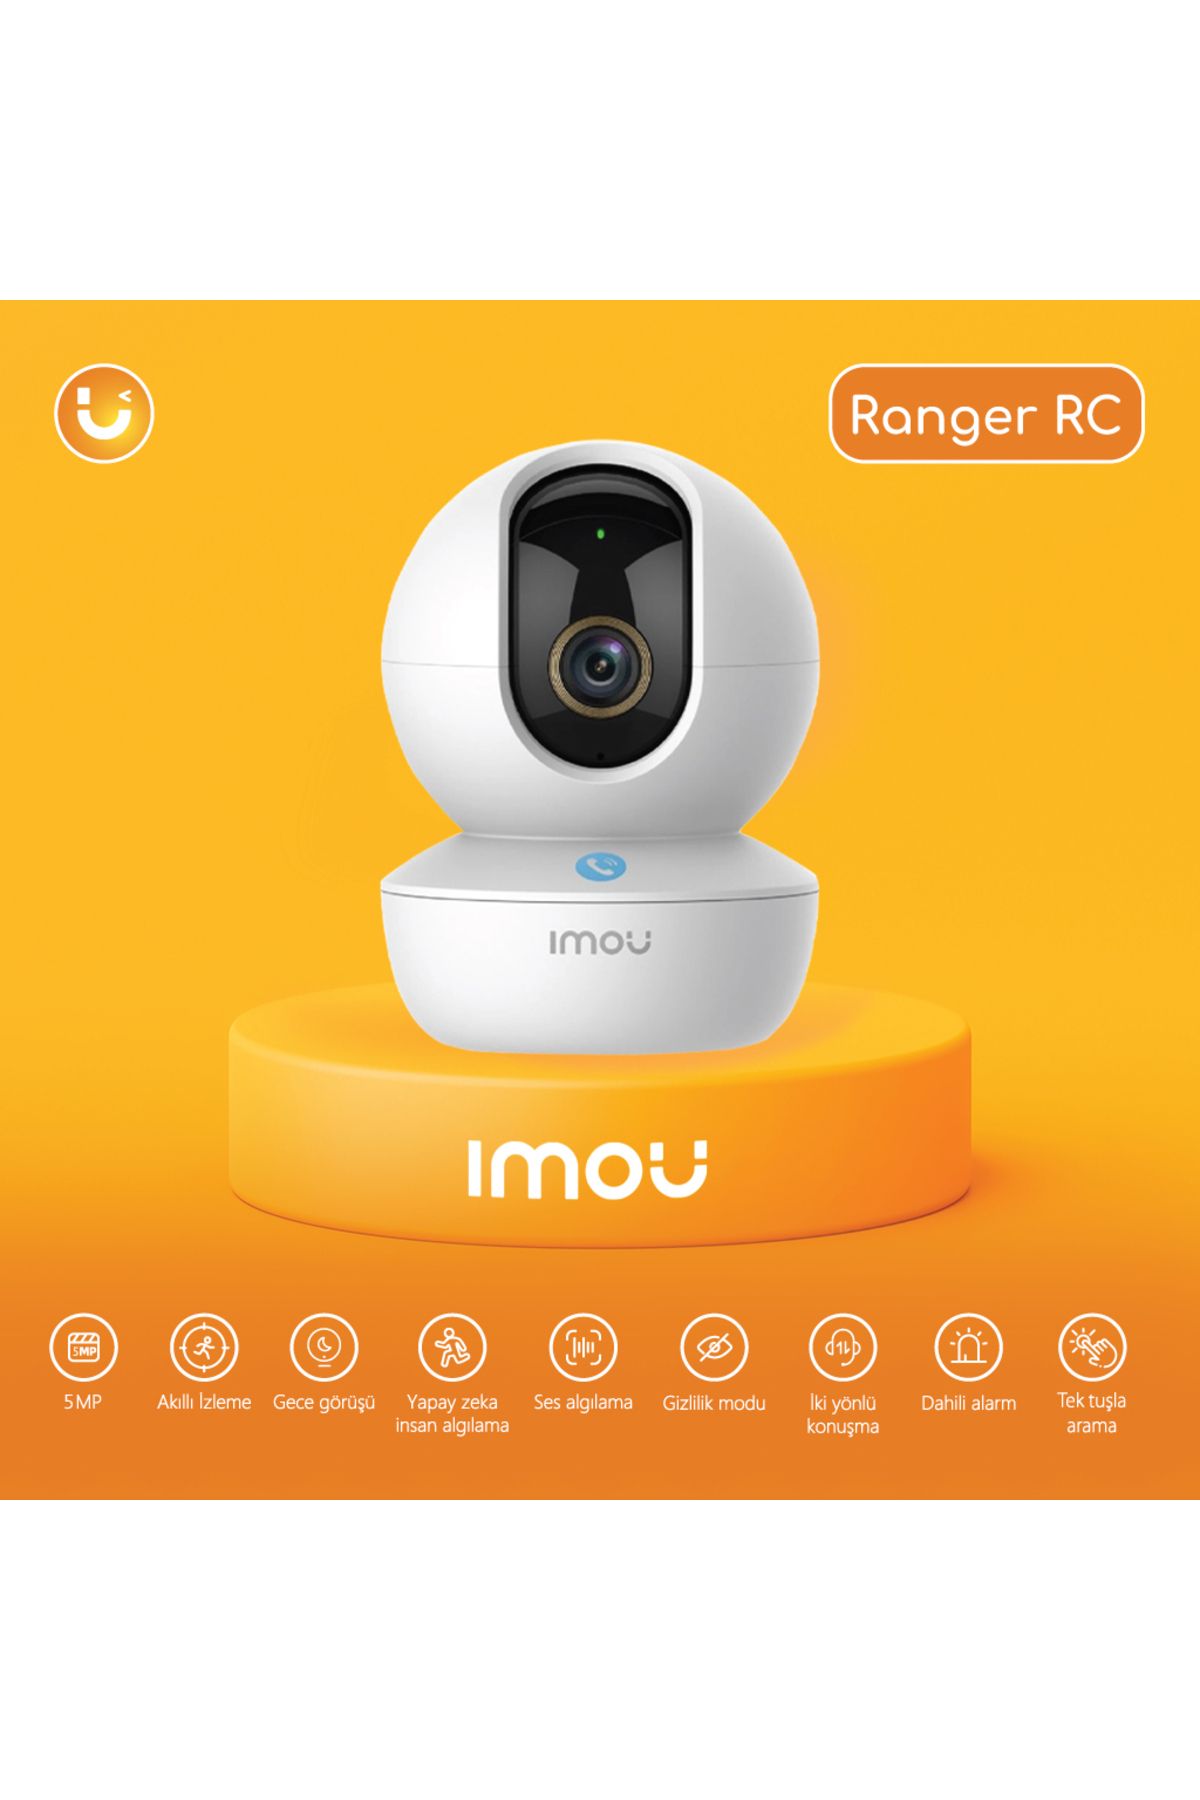 Imou Ranger Rc 5 Mp Iç Ortam Pt Kamera - Çift Yönlü Konuşma - Tek Tuşla Arama- Onvıf ( Ipc-gk2cp-5c0wr)